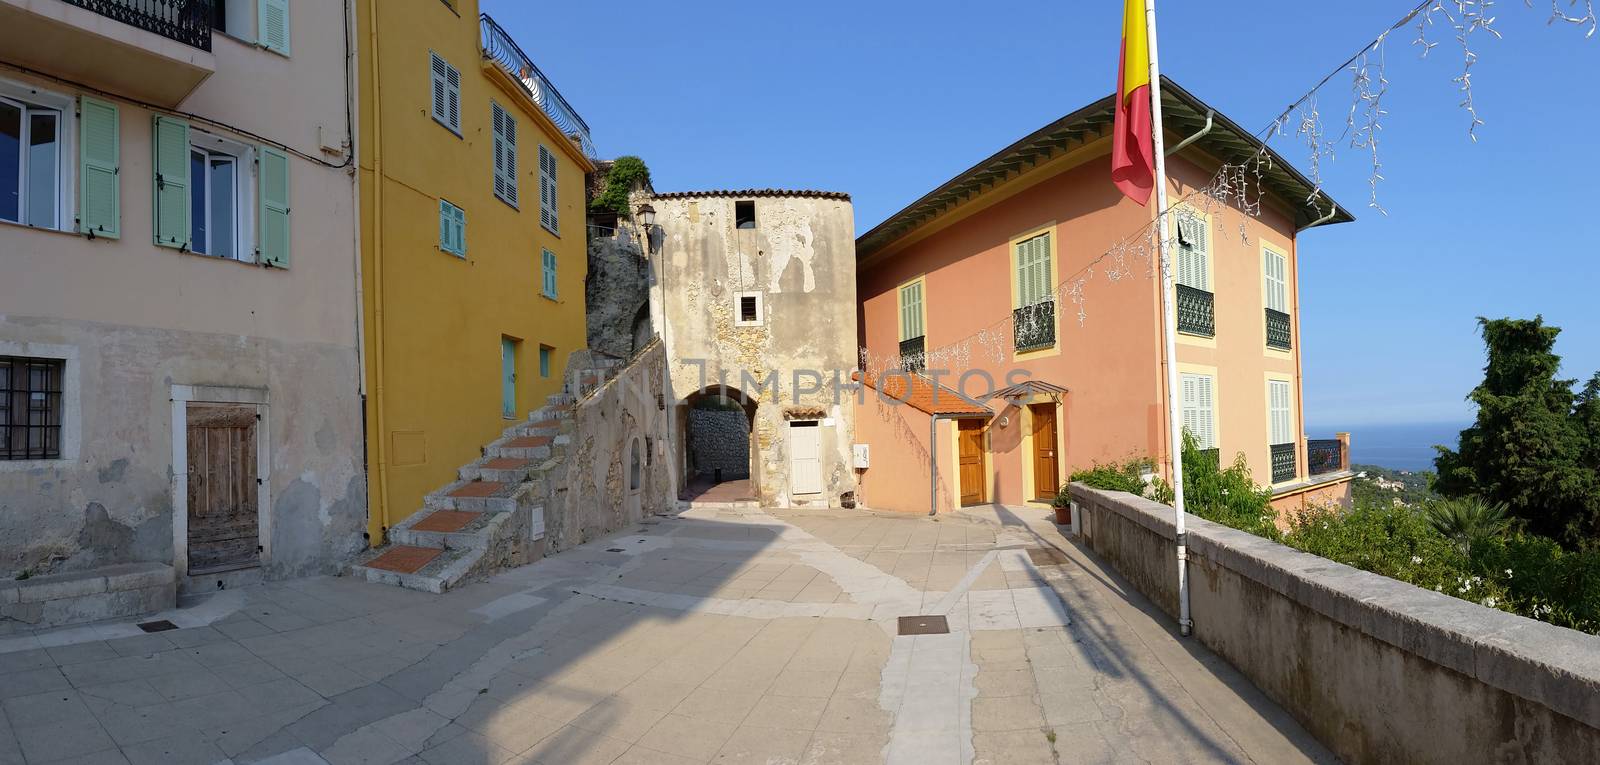 The old village of Roquebrune-Cap-Martin by bensib